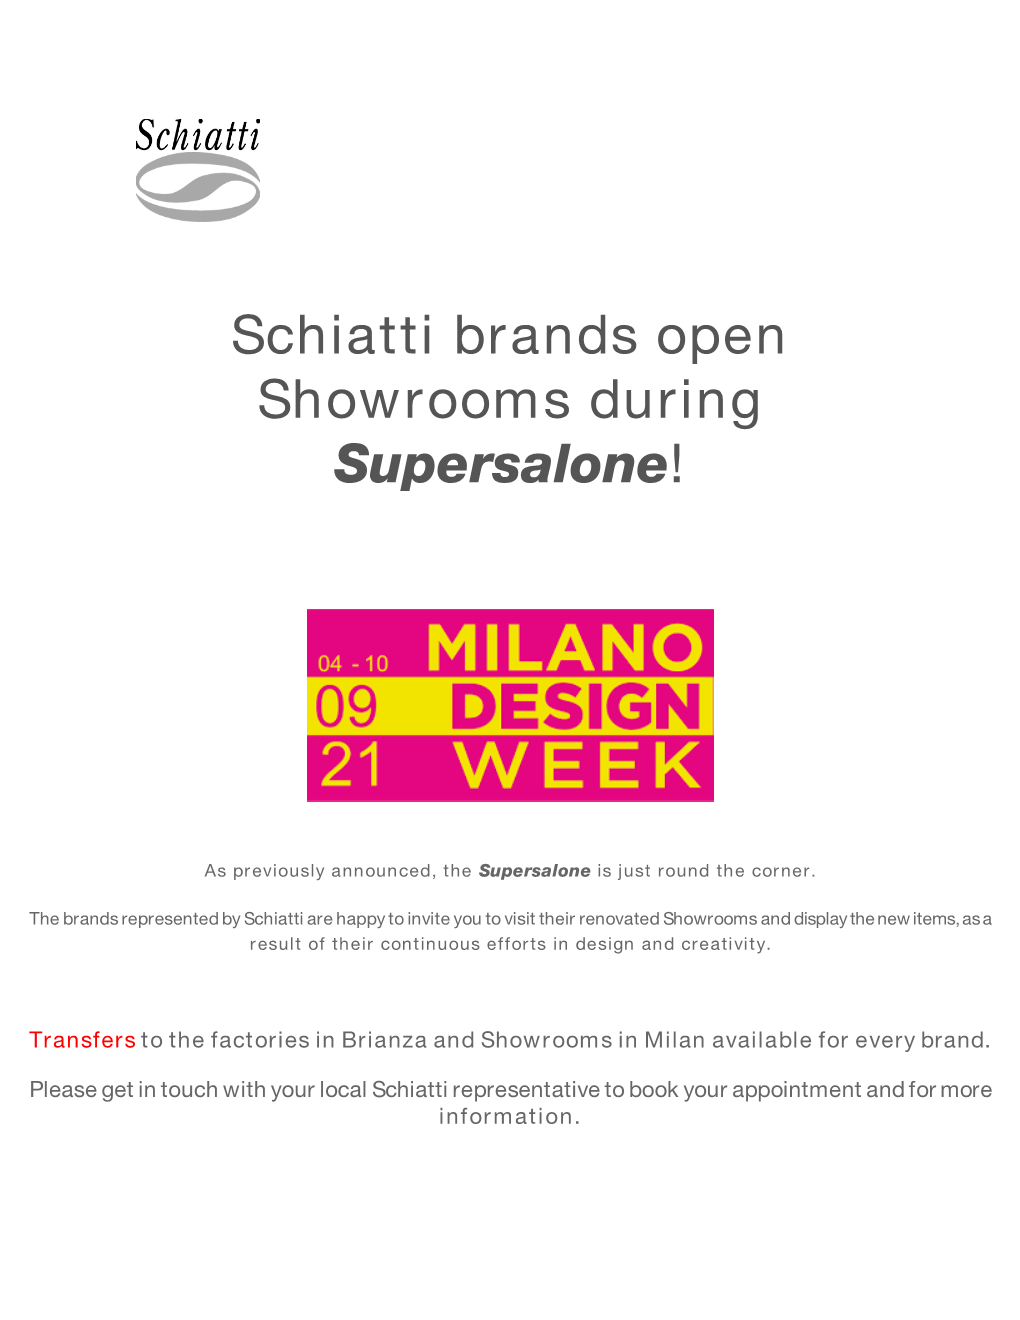 Schiatti Brands Open Showrooms During Supersalone!